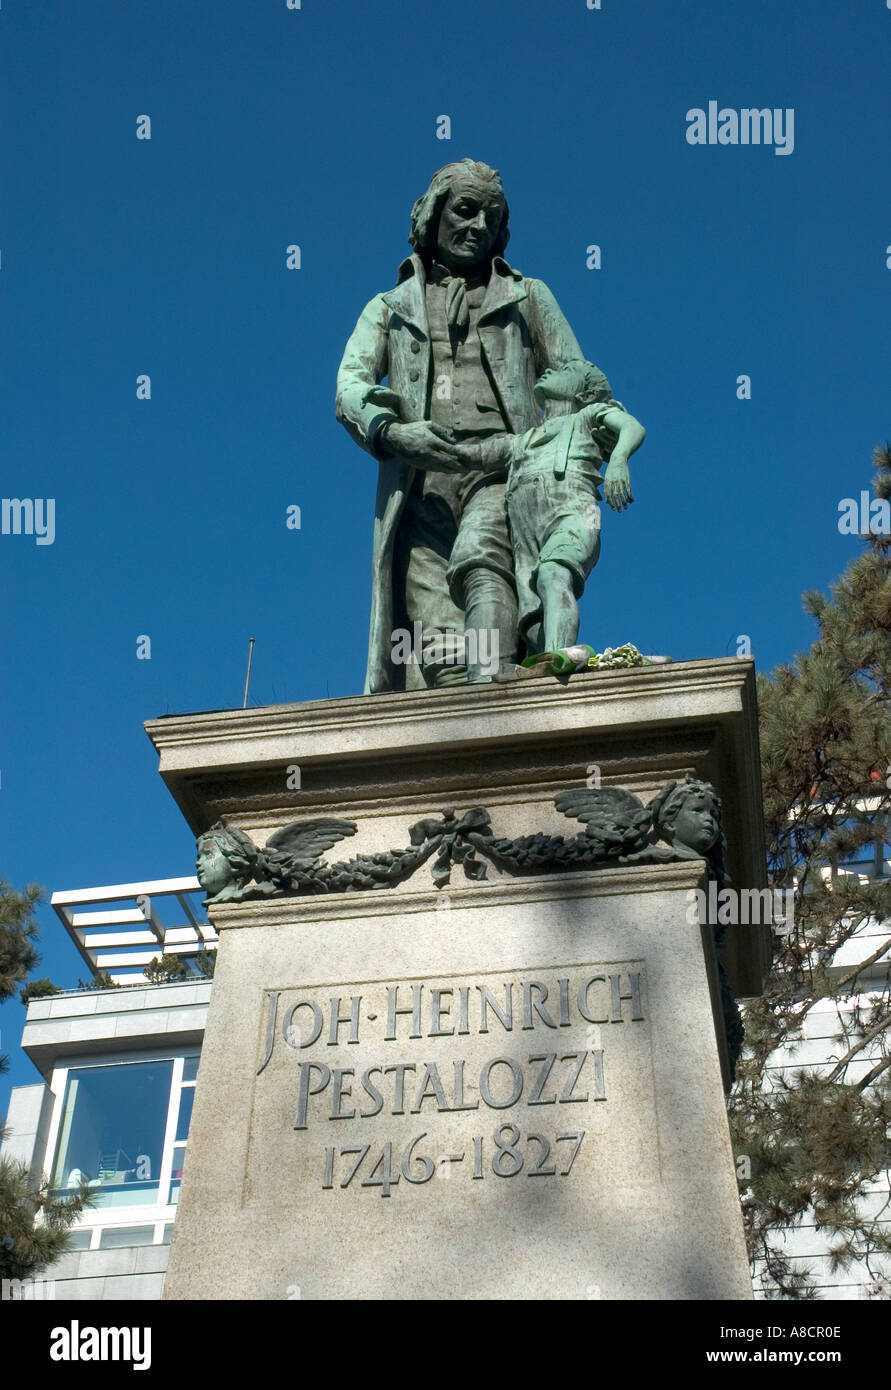 Statue to Joh Heinrich Pestalozzi in the beautiful city of Zurich in Switzerland Stock Photo